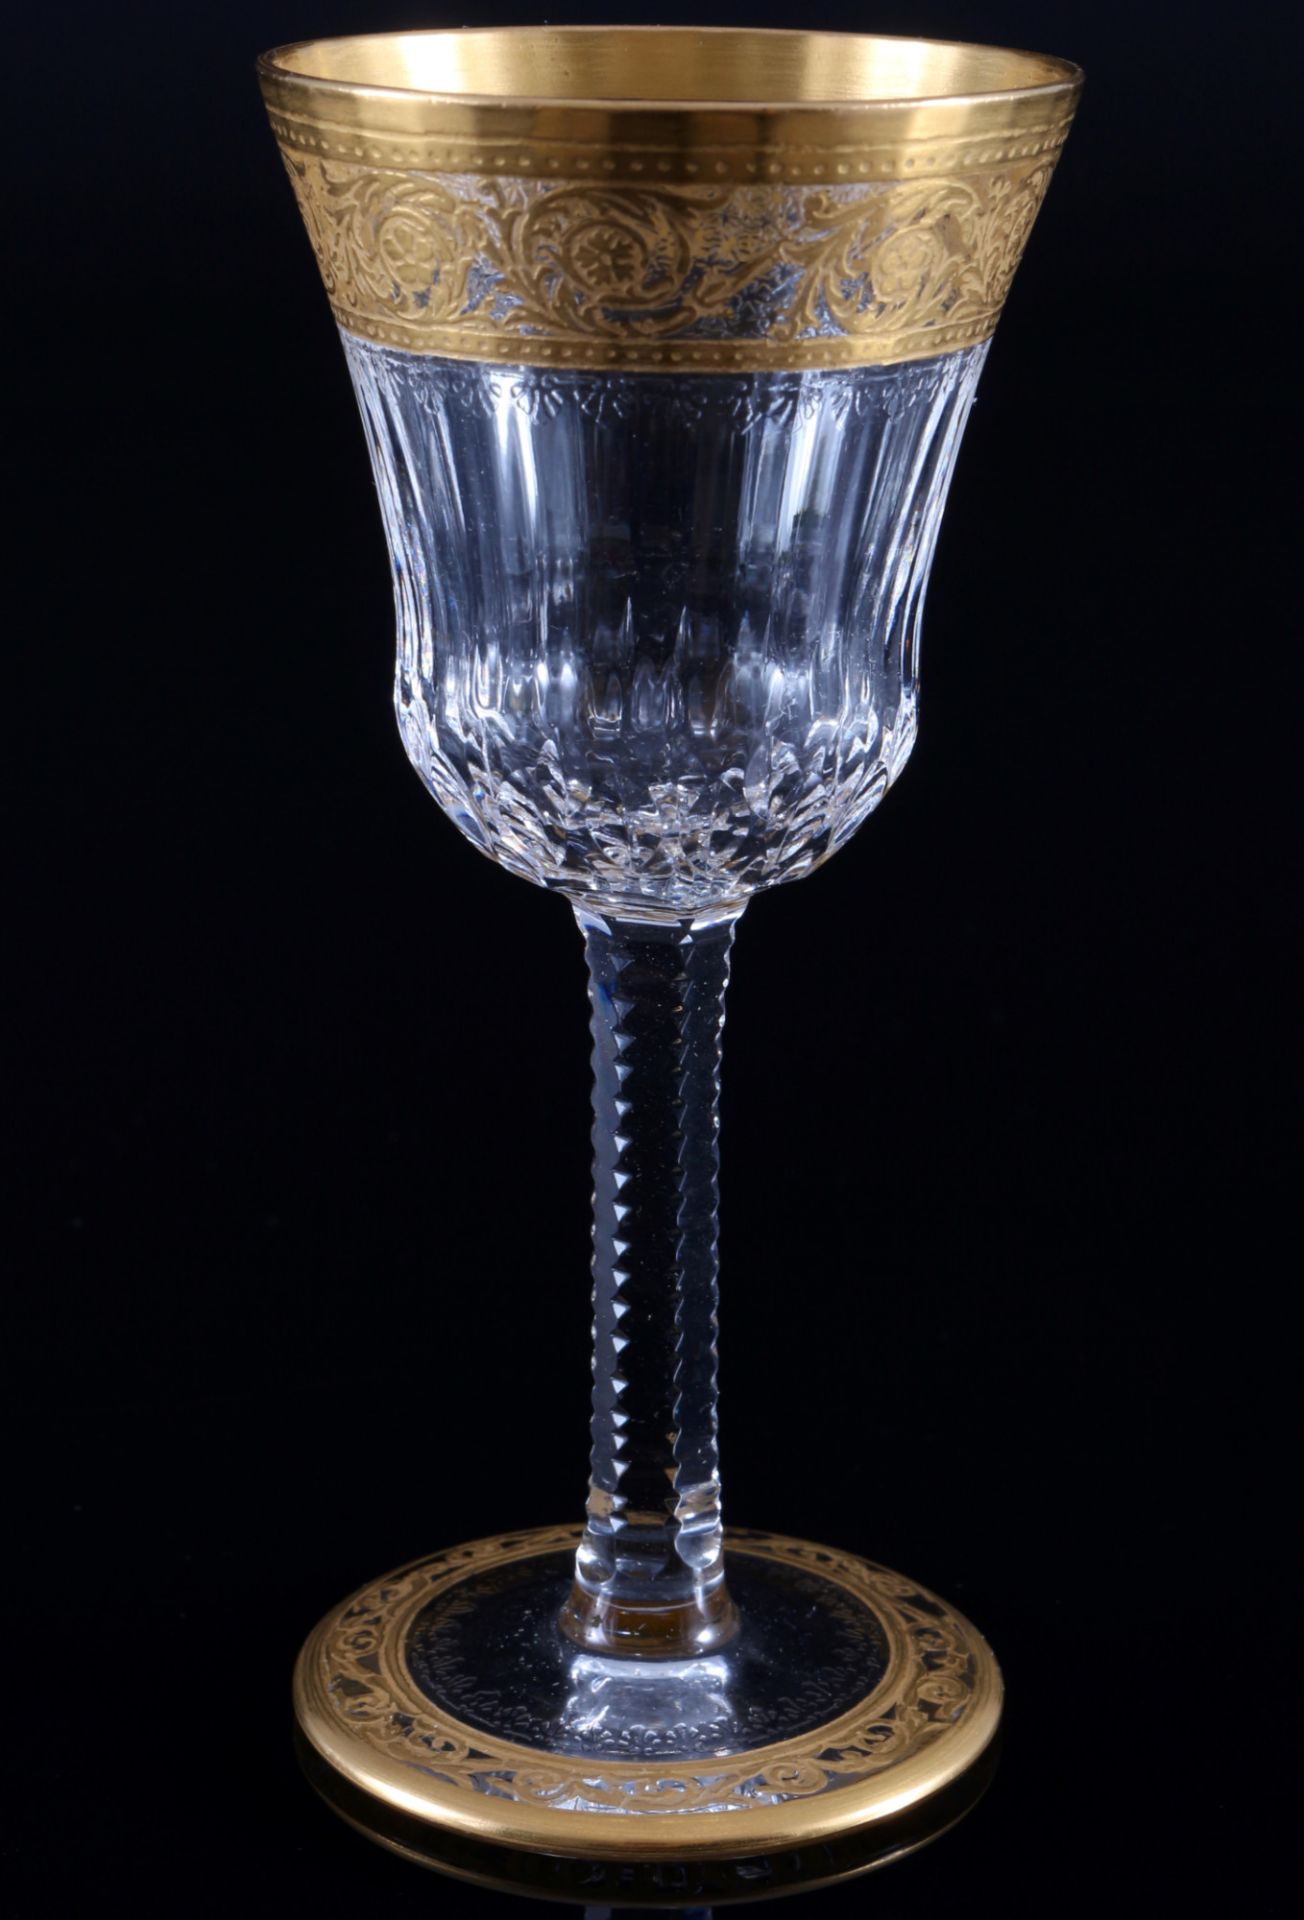 St. Louis Thistle Gold 6 liquor glasses, Likörgläser, - Image 2 of 2